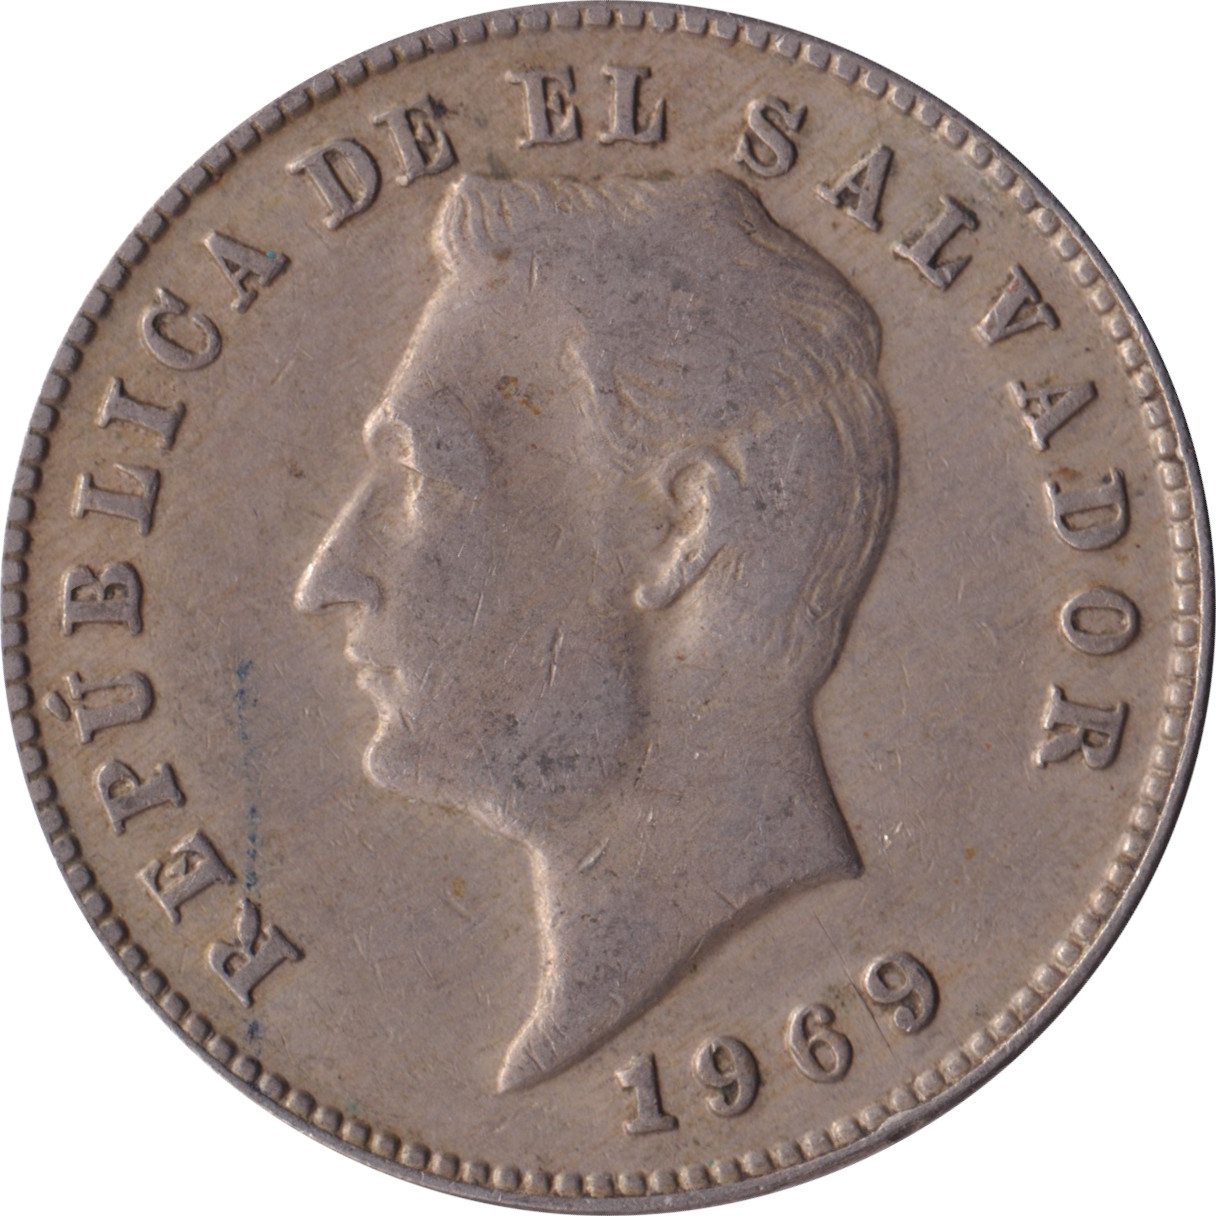 10 centavos - Francisco Morazan • Type 1